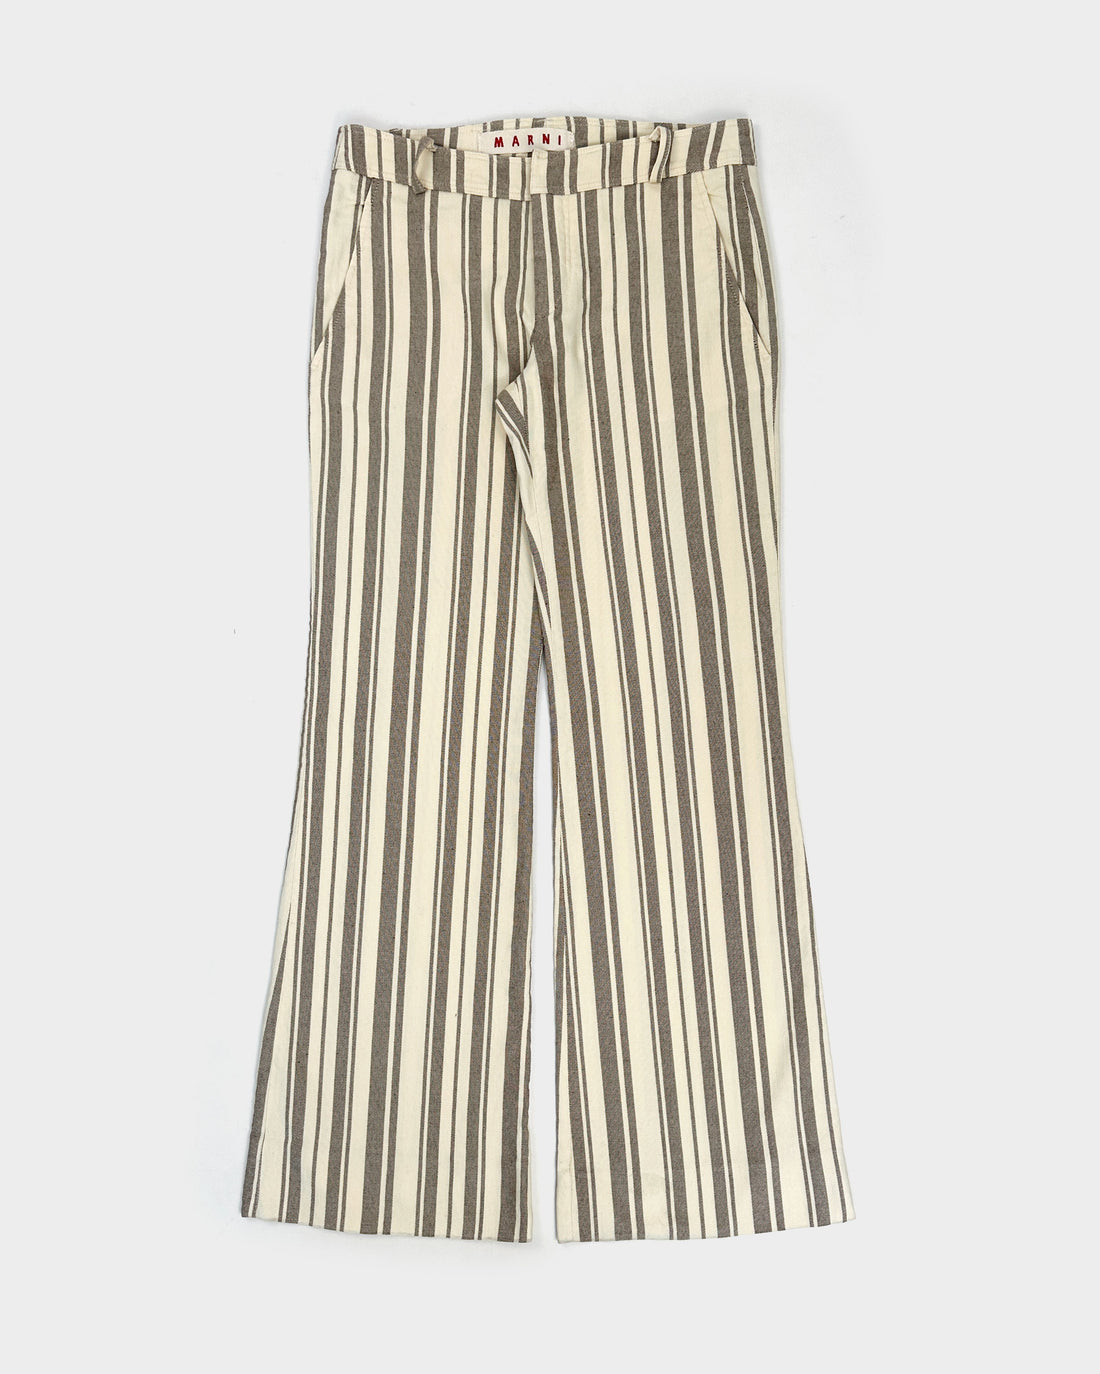 Marni Grey Striped Flare Pants 2000's